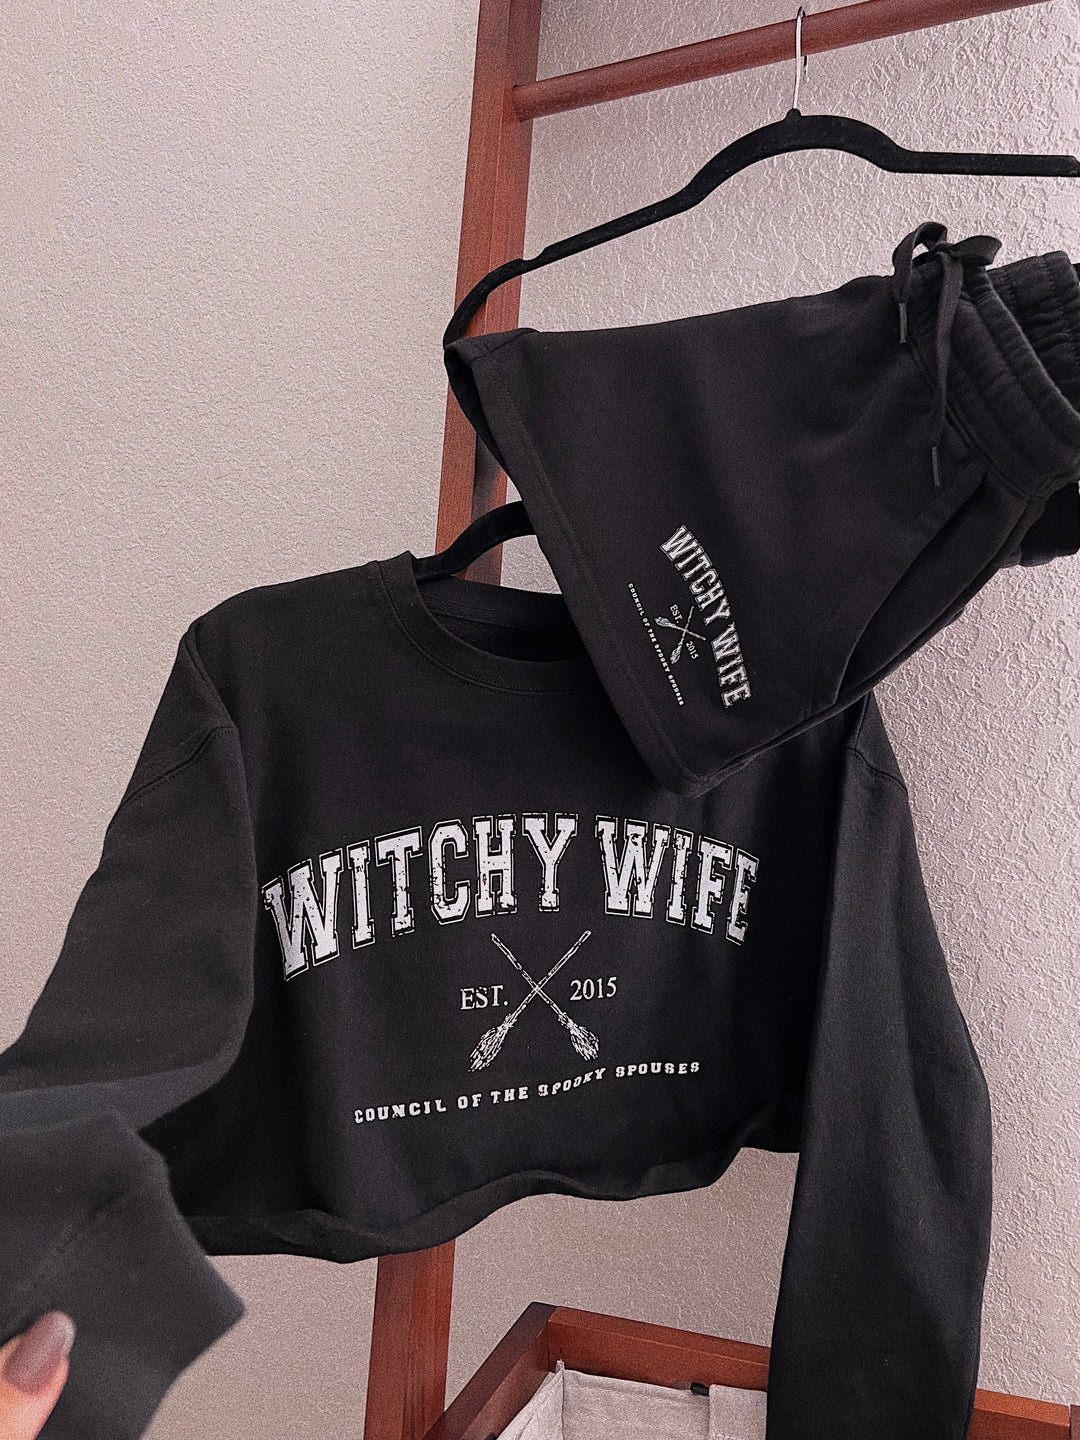 Witchy Wife Two-Piece Sweat Set